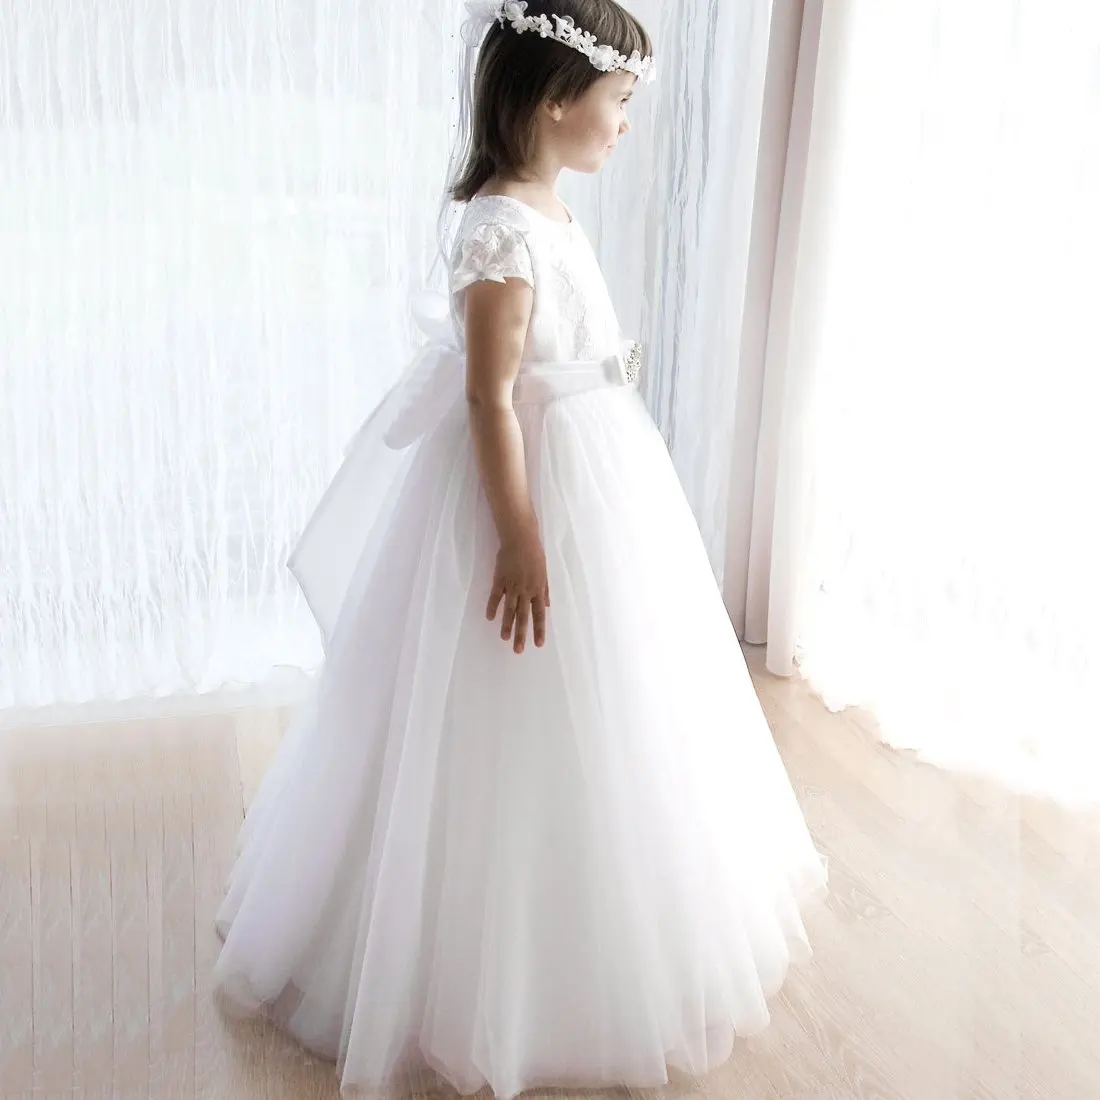 Elegant white soft tulle skirt wedding gown with full sleeve royal bodice